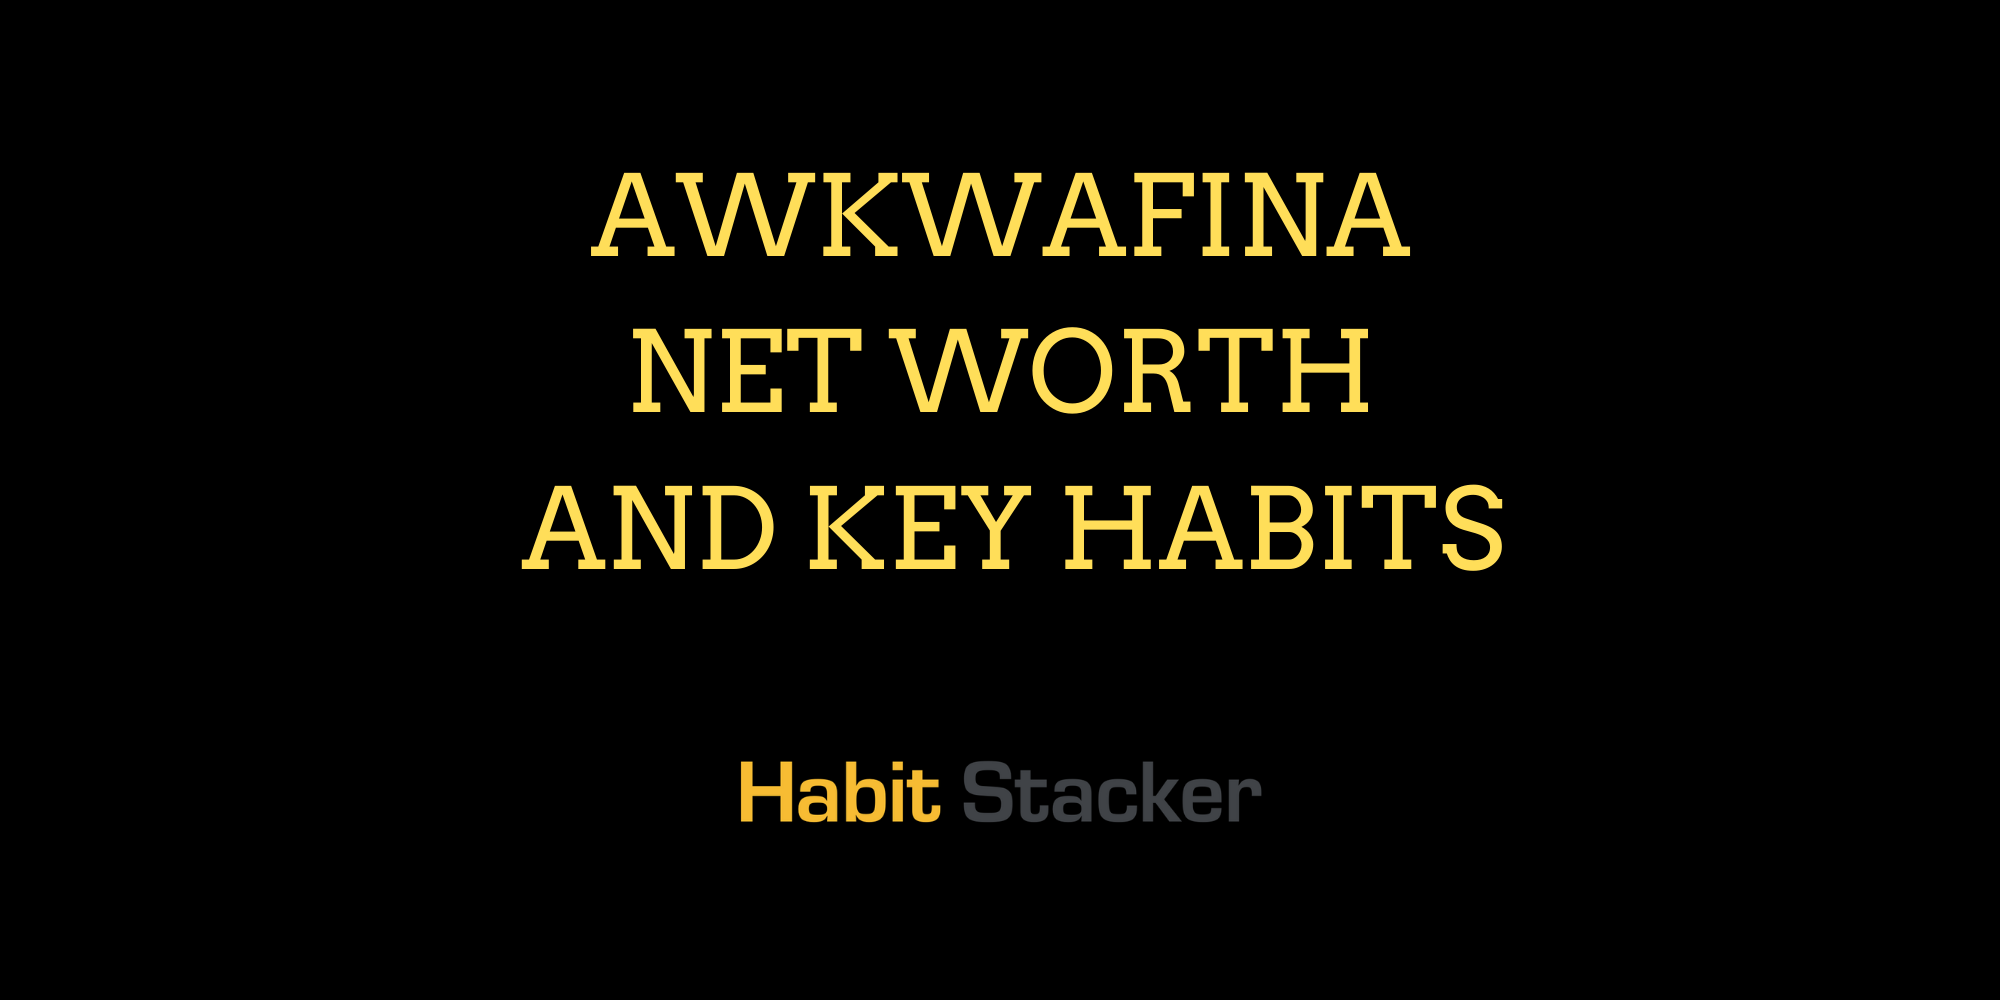 Awkwafina Net Worth and Key Habits